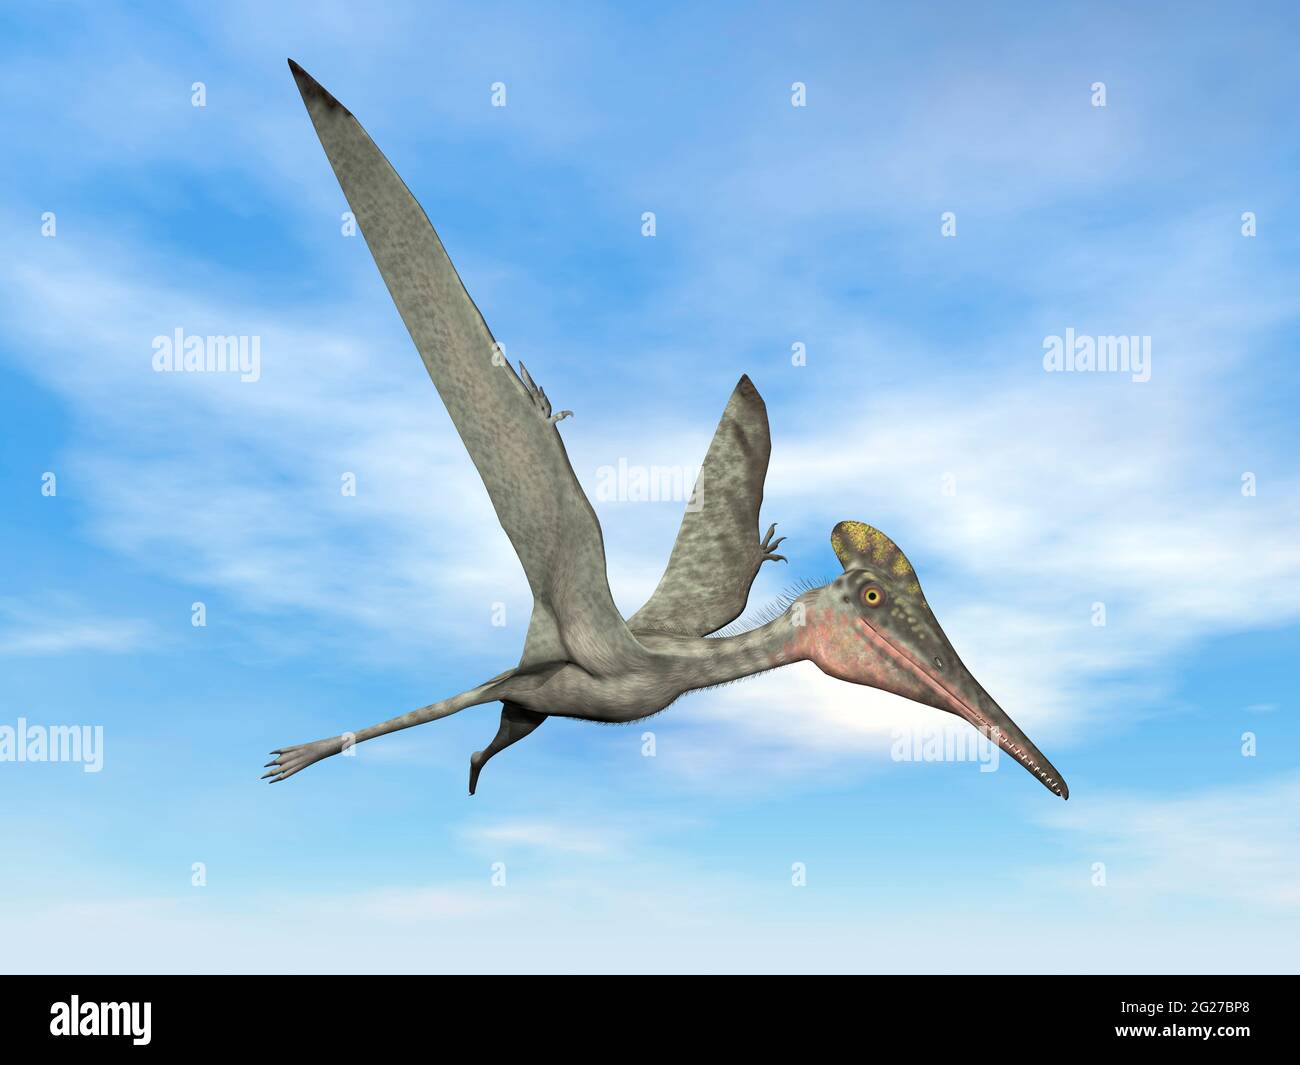 Pterodactylus uccello preistorico che vola nel cielo blu. Foto Stock